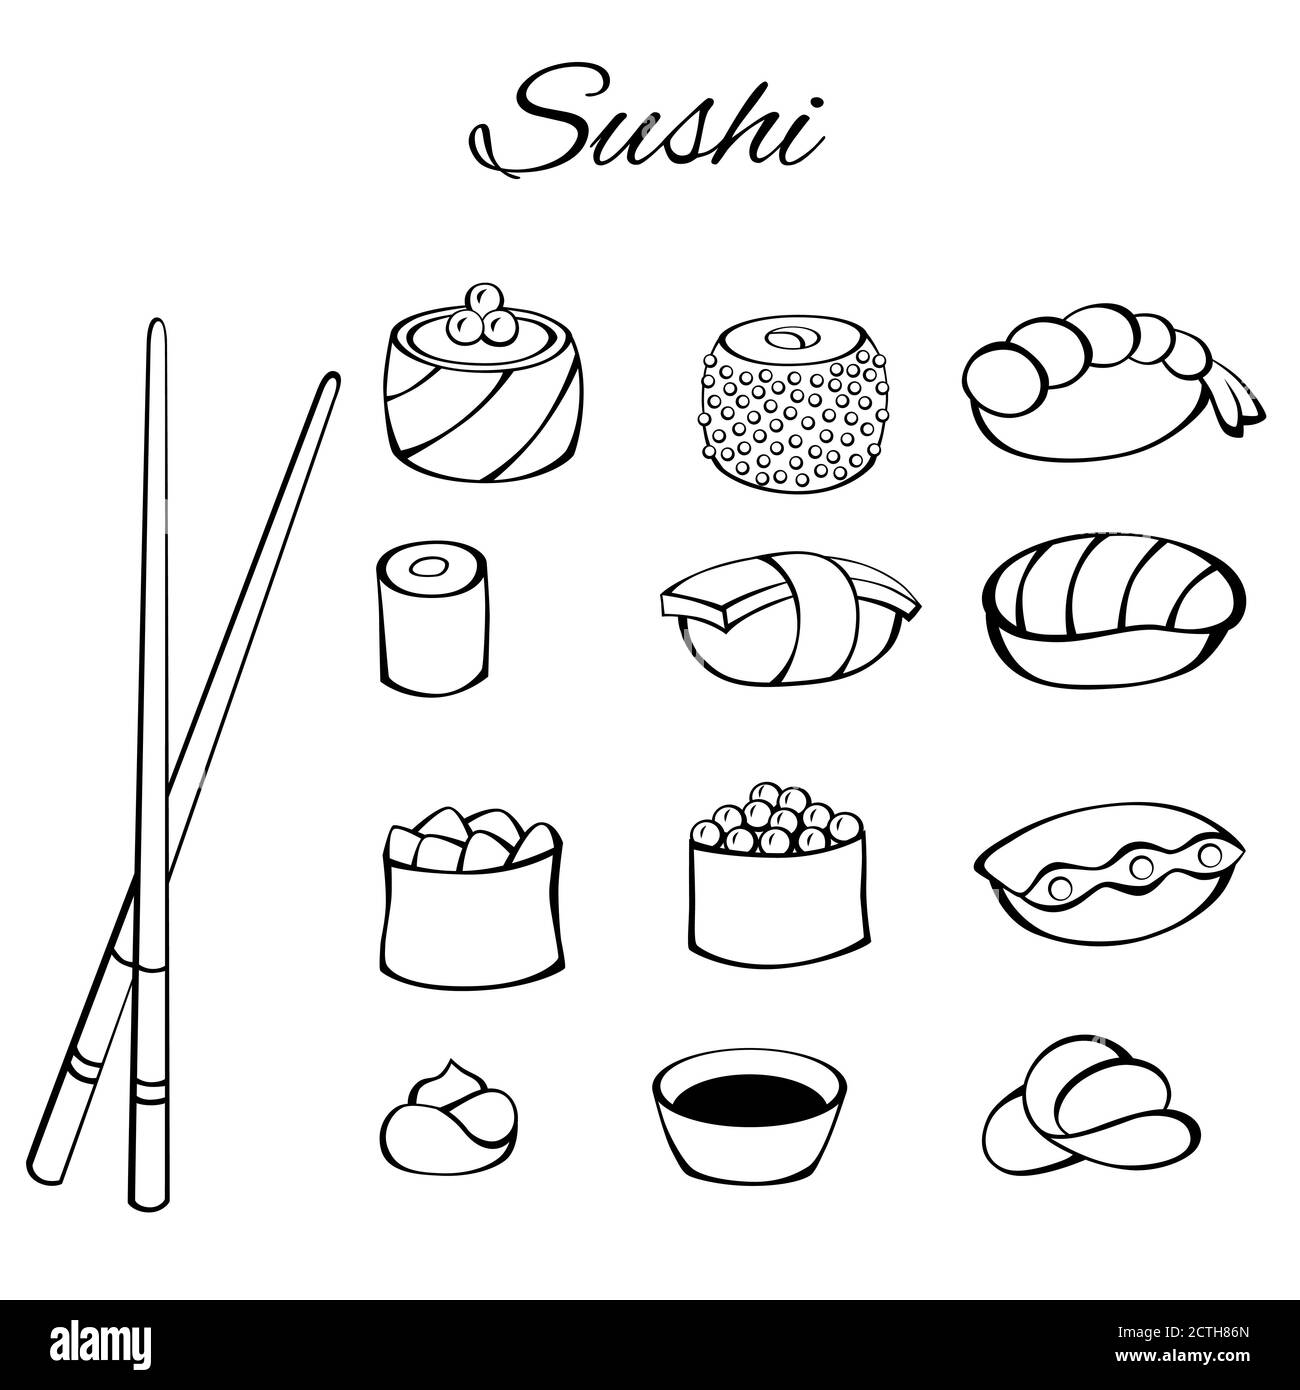 Sushi food set black white isolated illustration vector Stock Vector